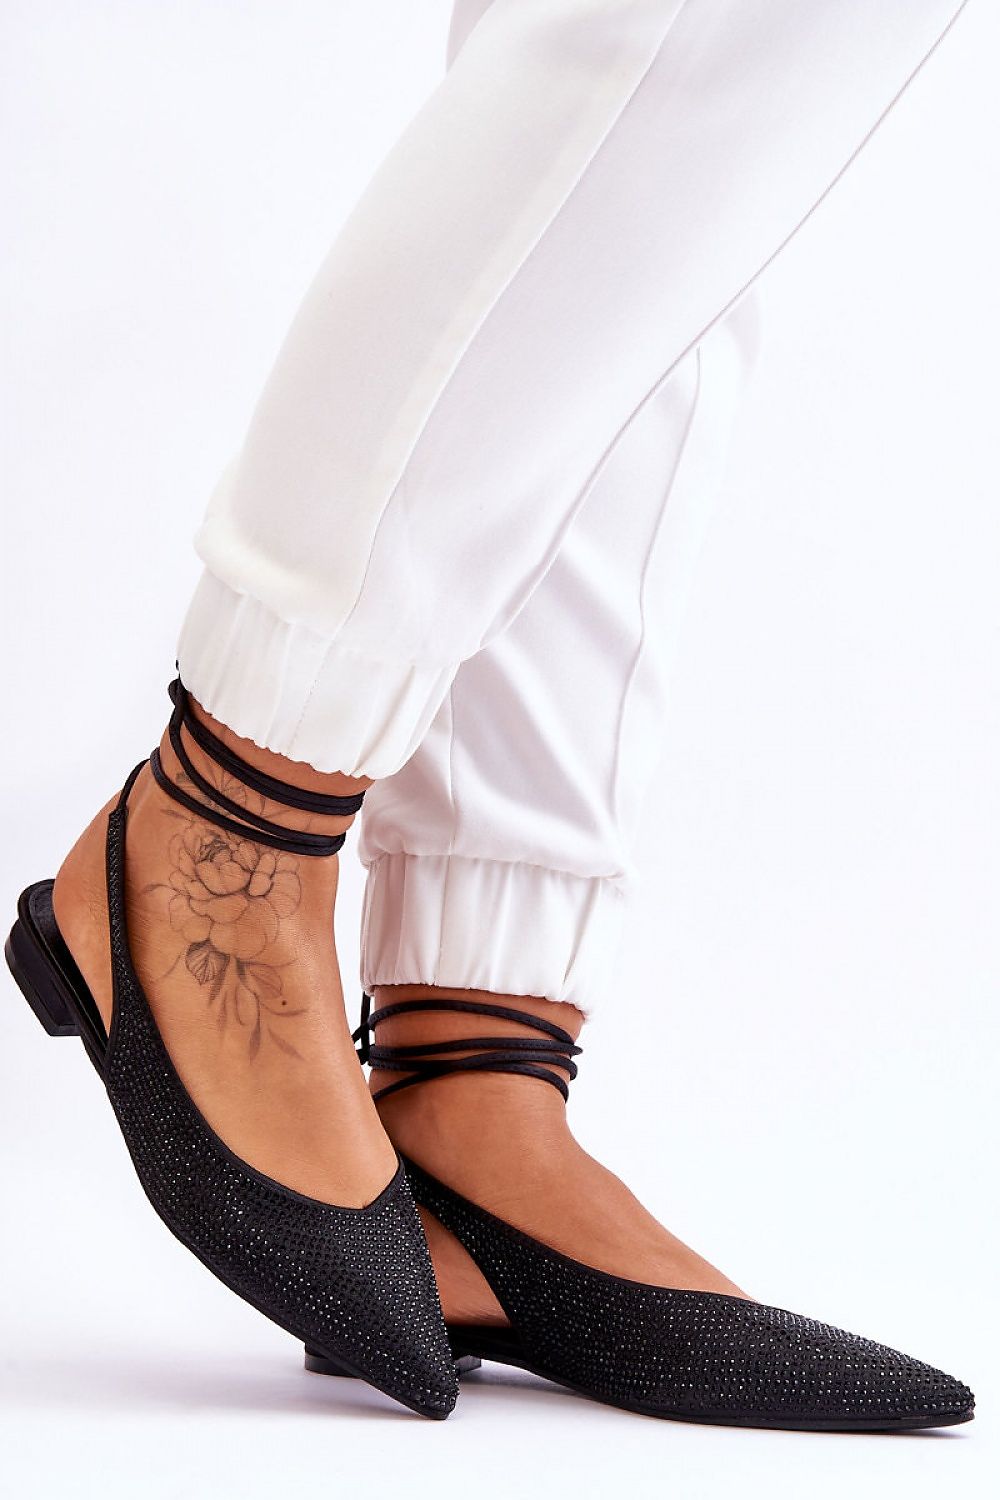 TEEK - Shimmery Textured Ballet Ankle Tie Flats SHOES TEEK Trend   